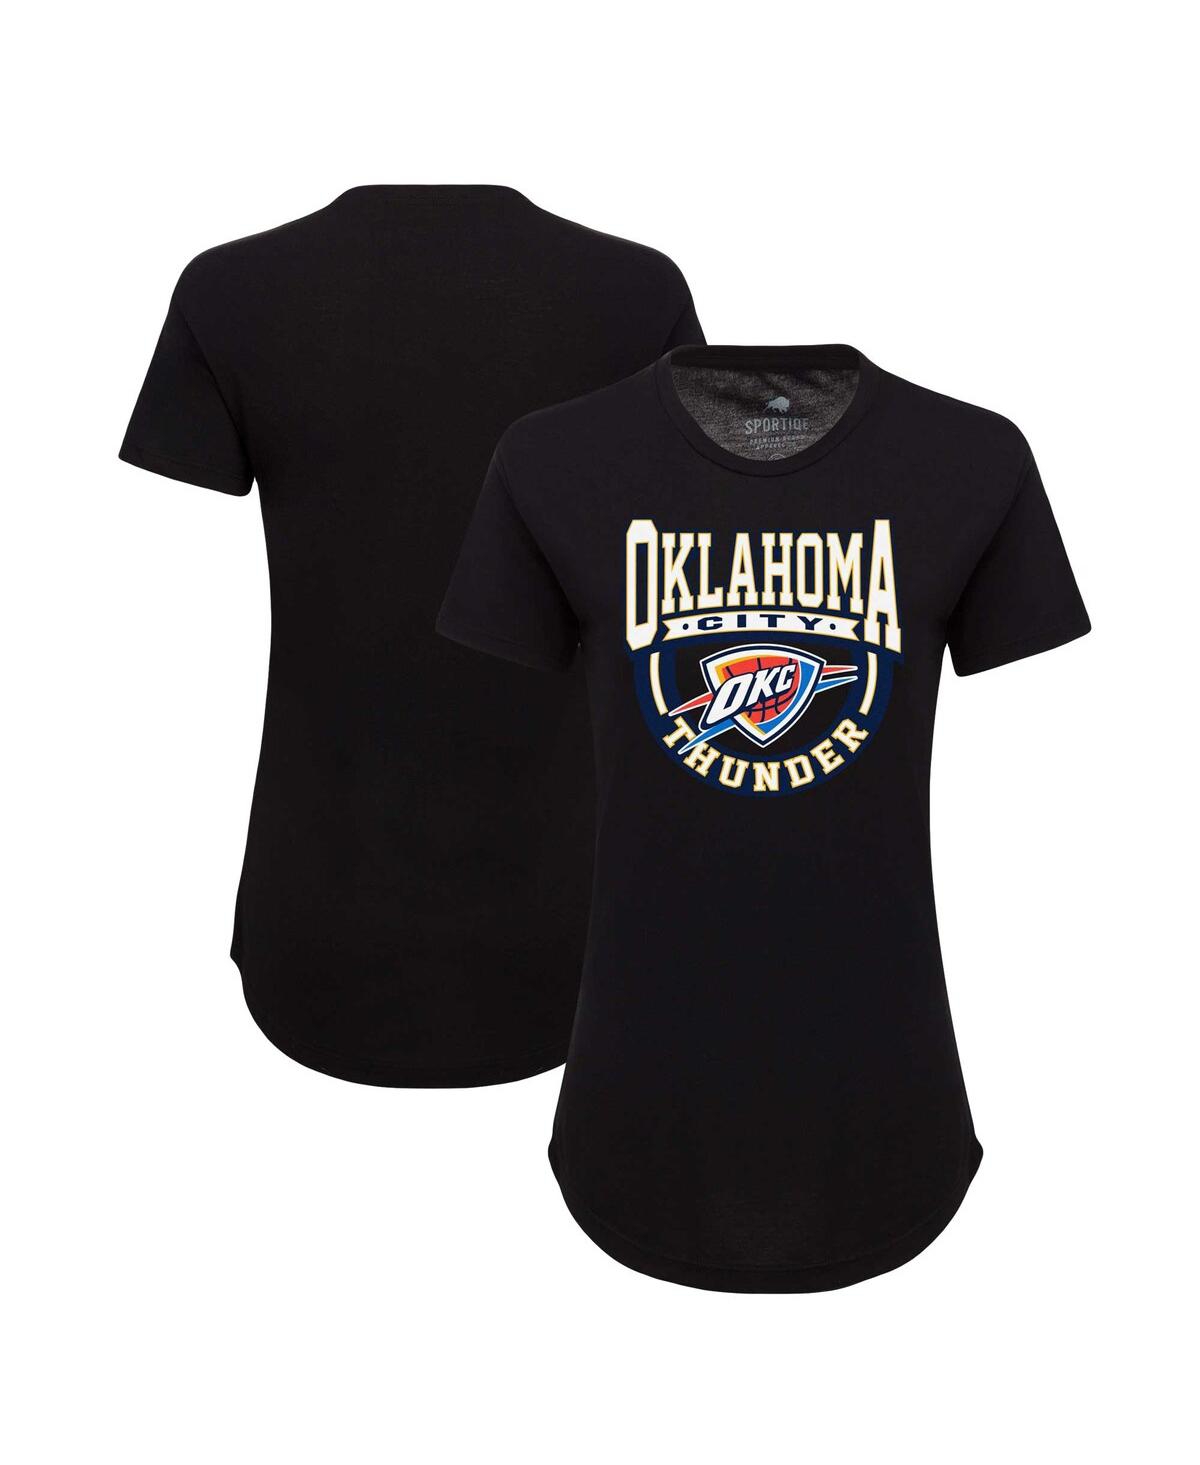 Sportiqe Women's Black Oklahoma City Thunder Phoebe Super Soft Tri-blend T-shirt